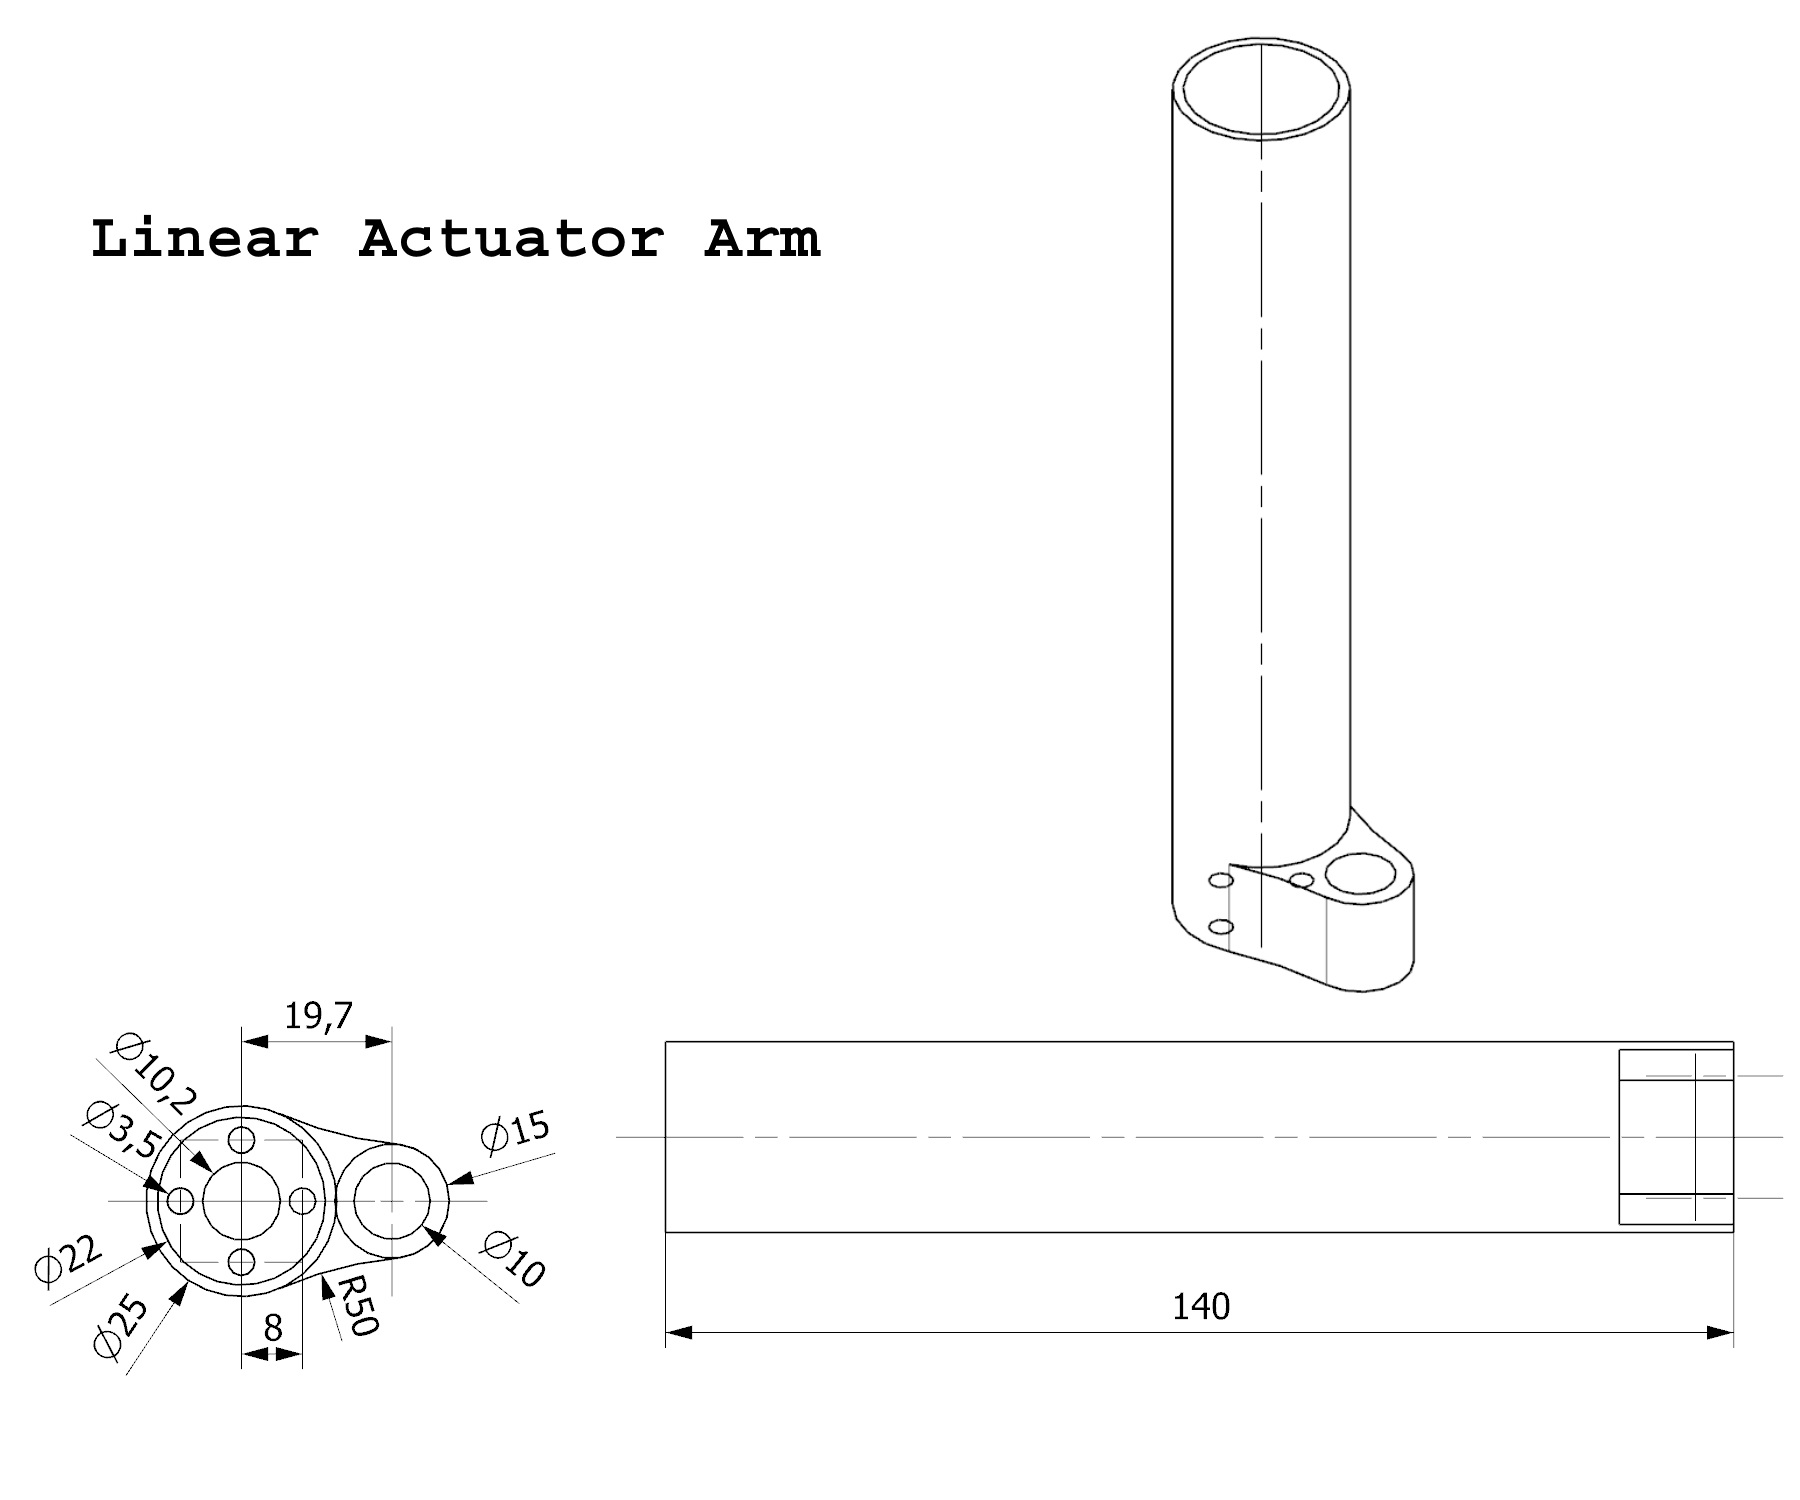 Linear actuator arm